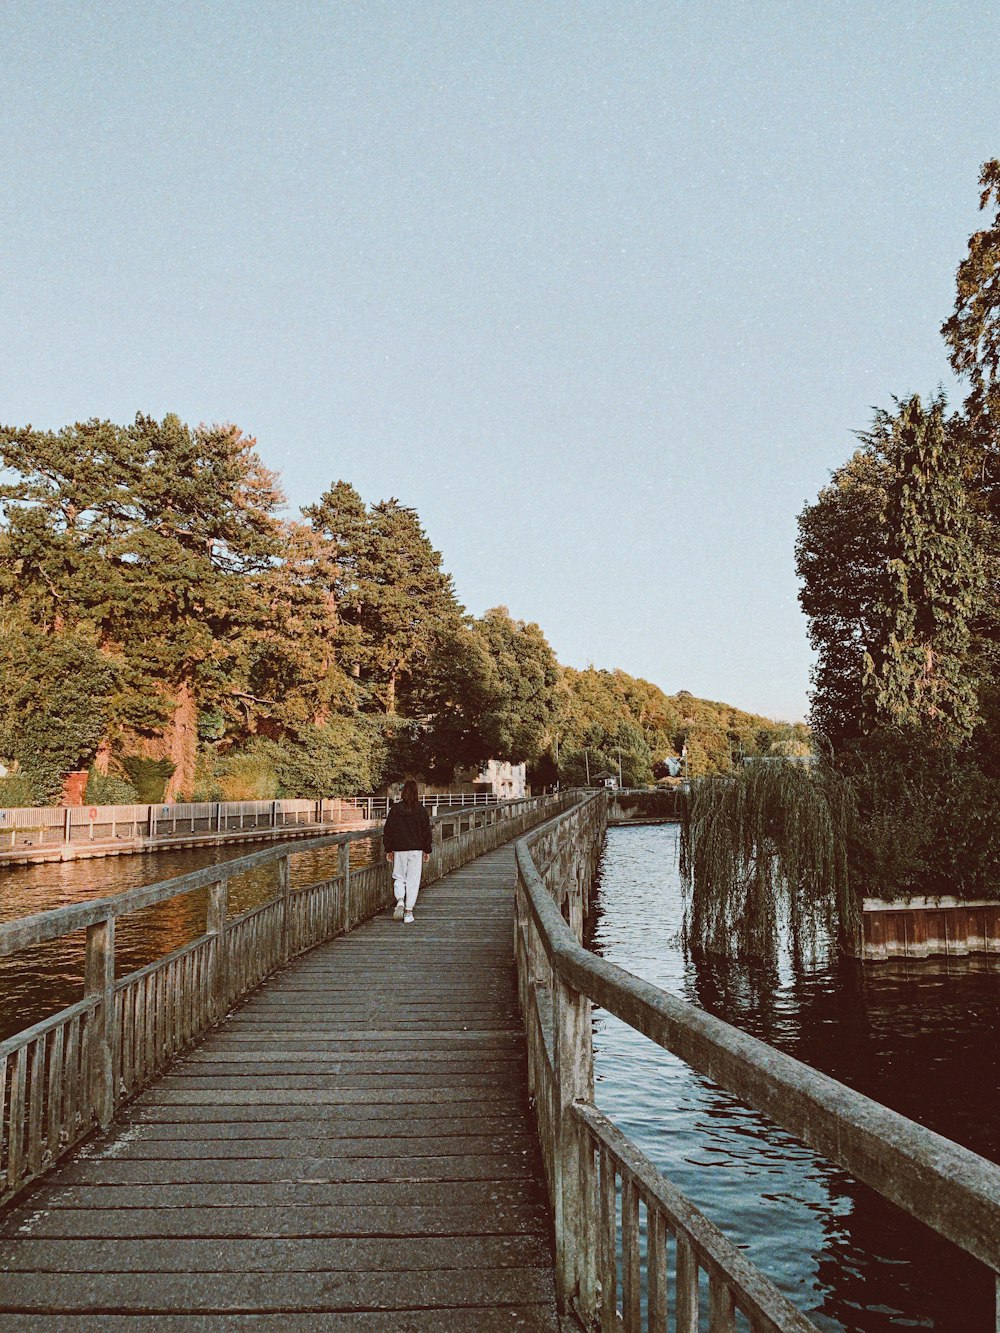 person in black top walking on wooden bridge